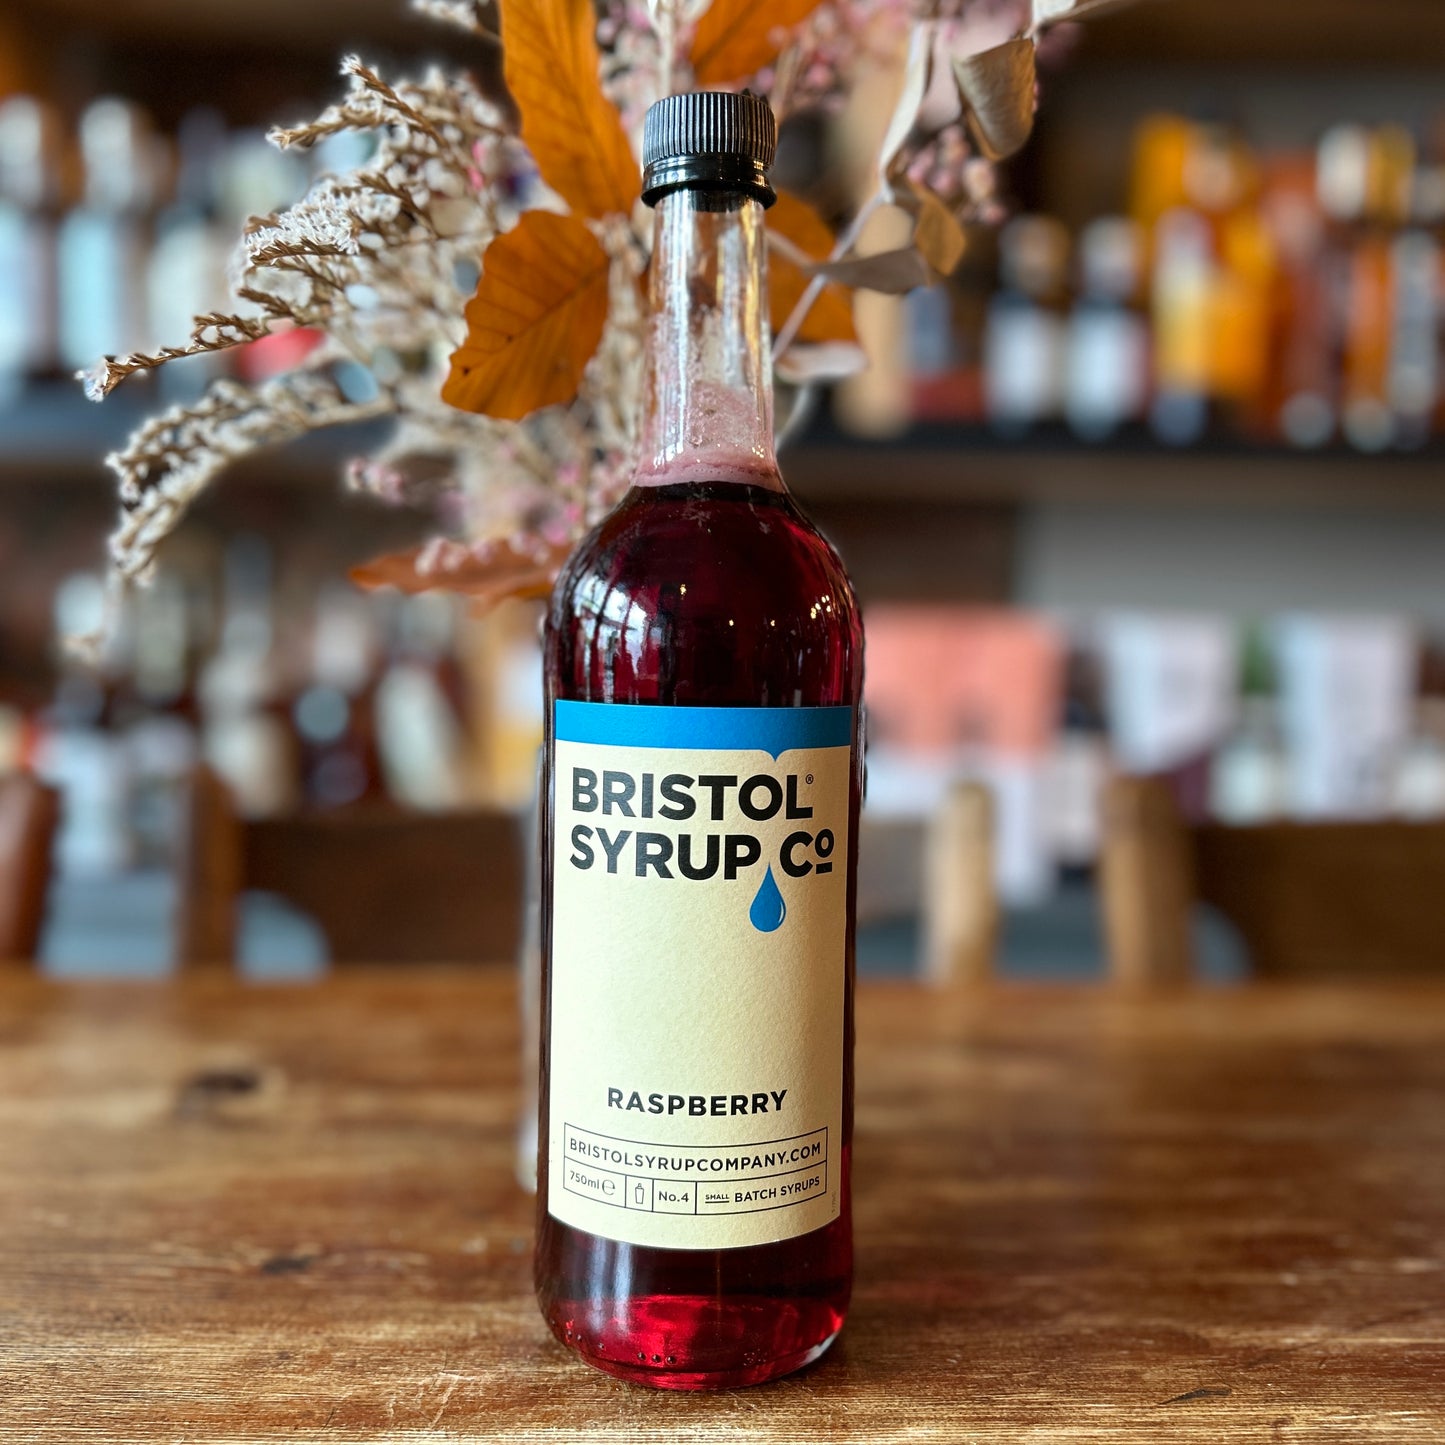 Bristol Syrup Co Raspberry Syrup